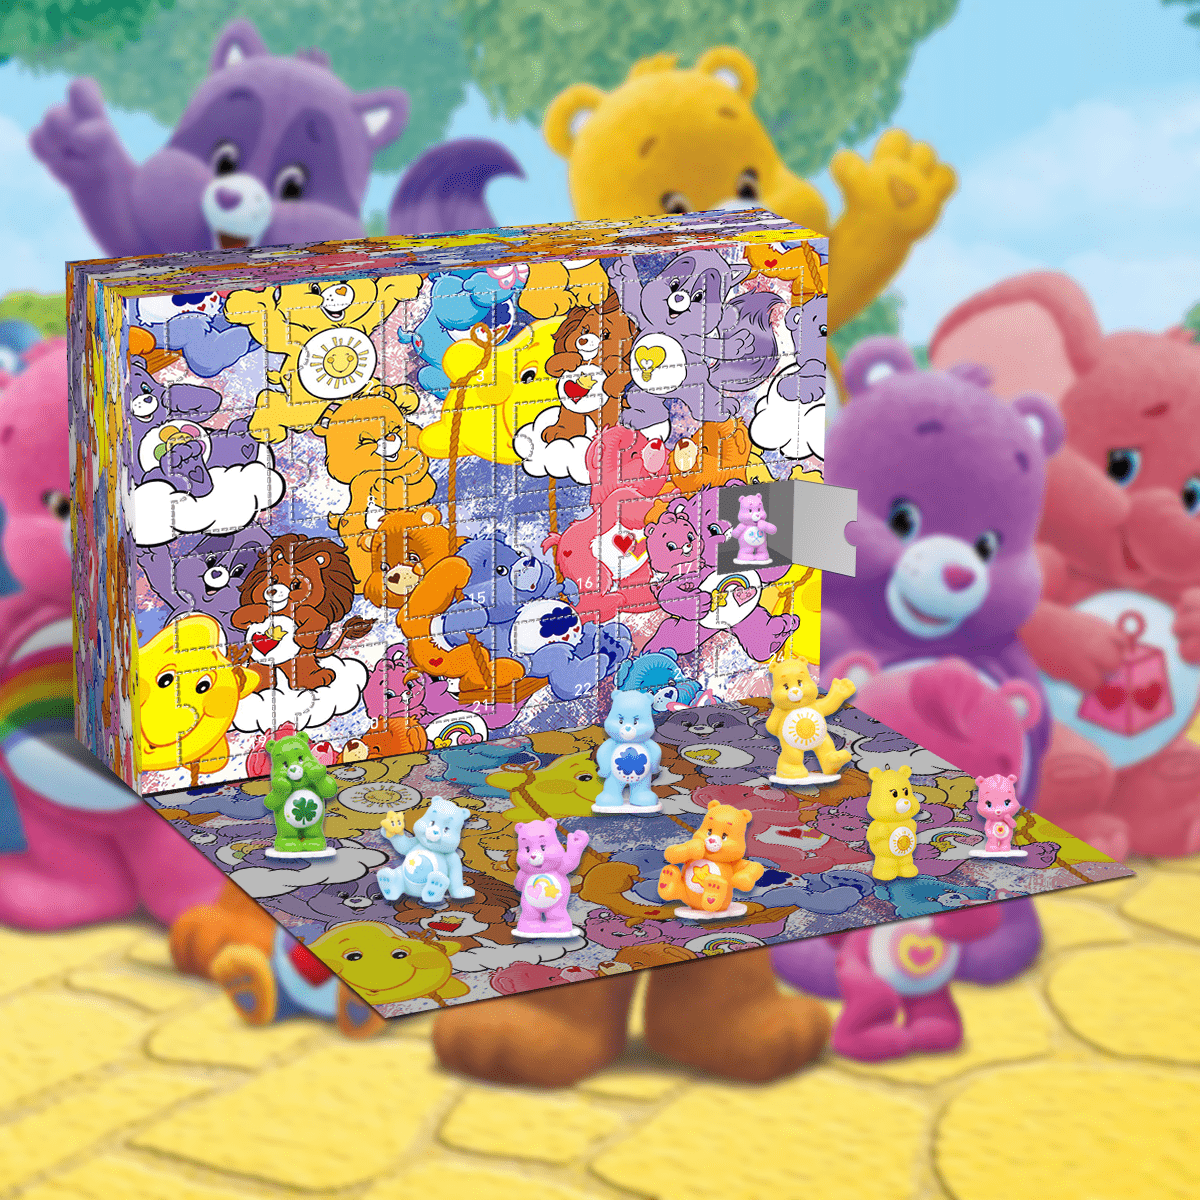 Care bears puzzle advent calendar - 24x30cm - 24 pieces - Care Bears